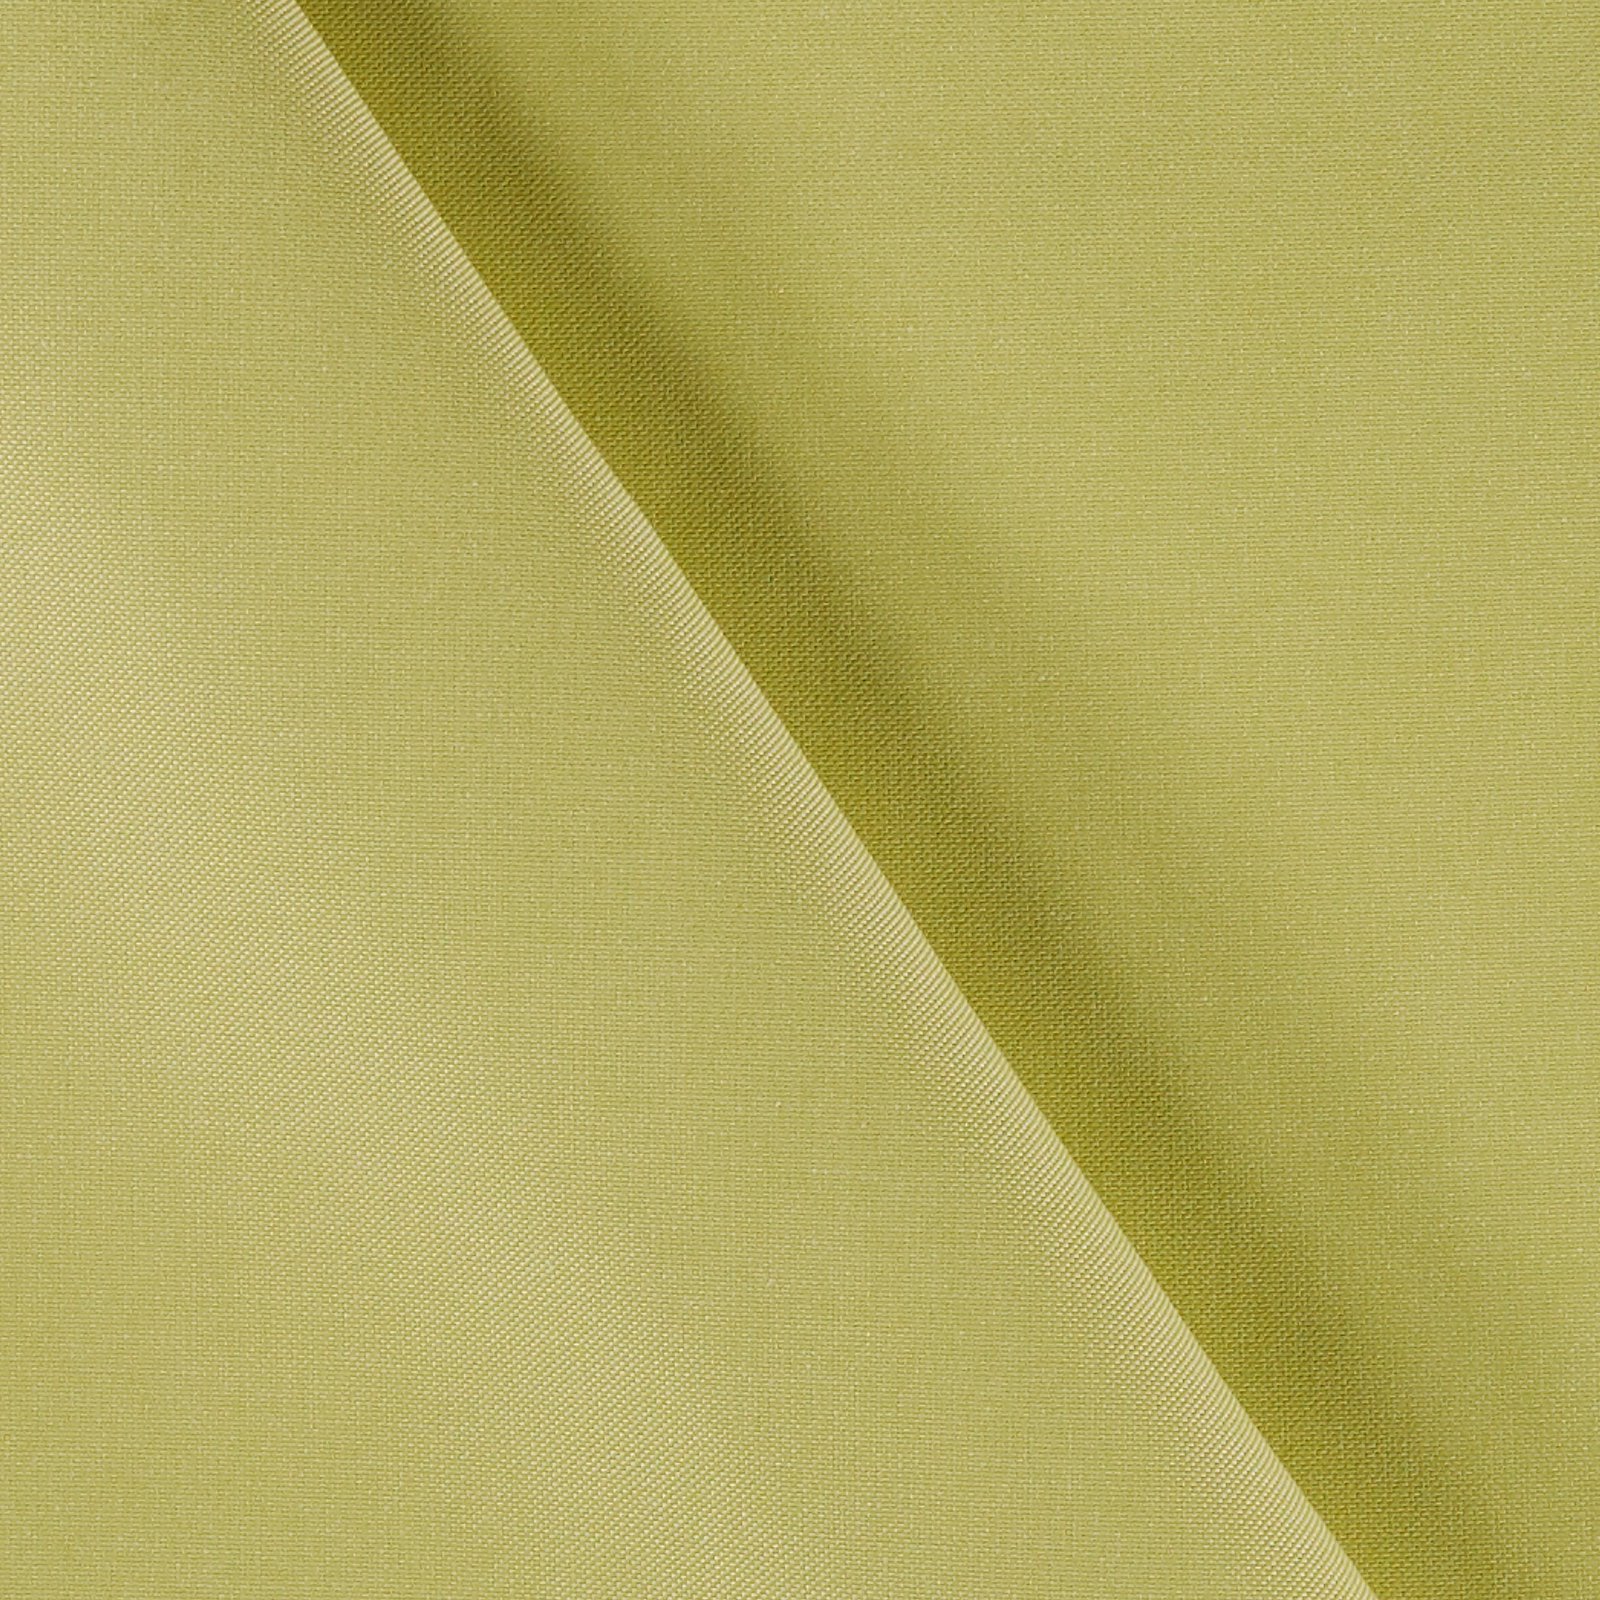 Outdoor canvas waterproof yellow 826622_pack